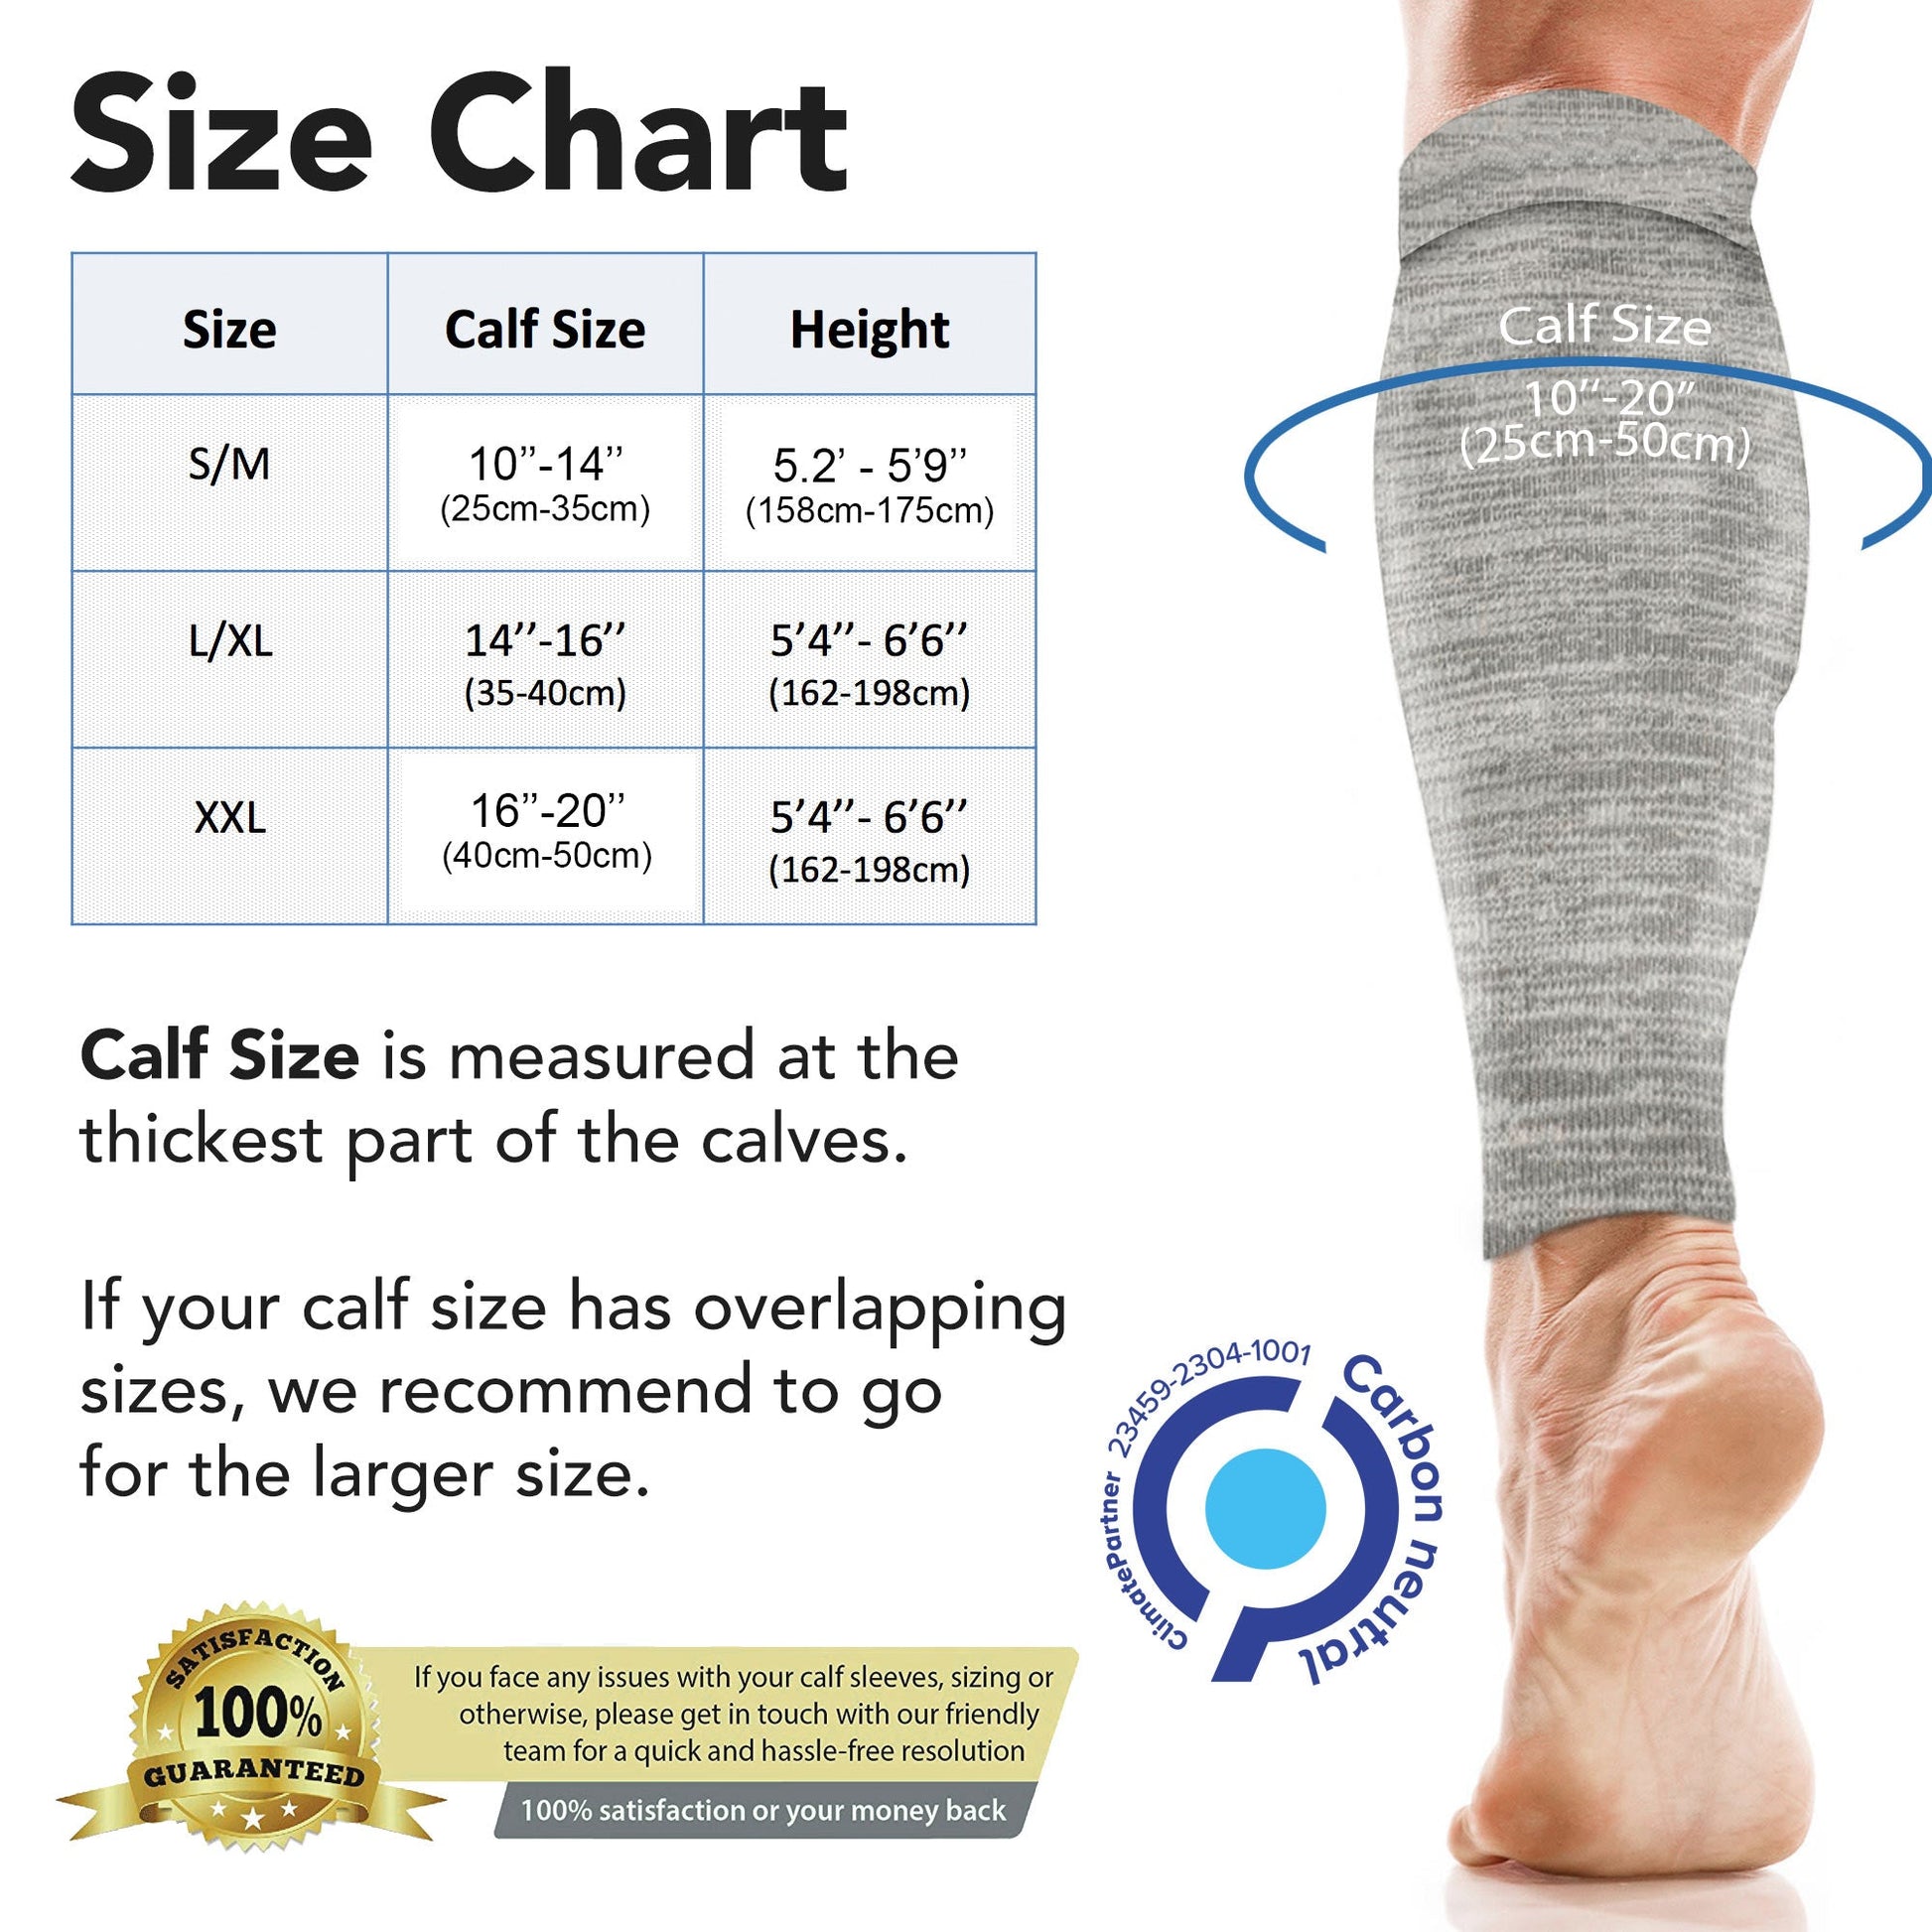 aZengear Calf Support Compression Sleeves (Pair) for Women, Men, Running |  20-30mmHg Class 2 Shin Splints Brace, Footless Leg Socks for Torn Muscle